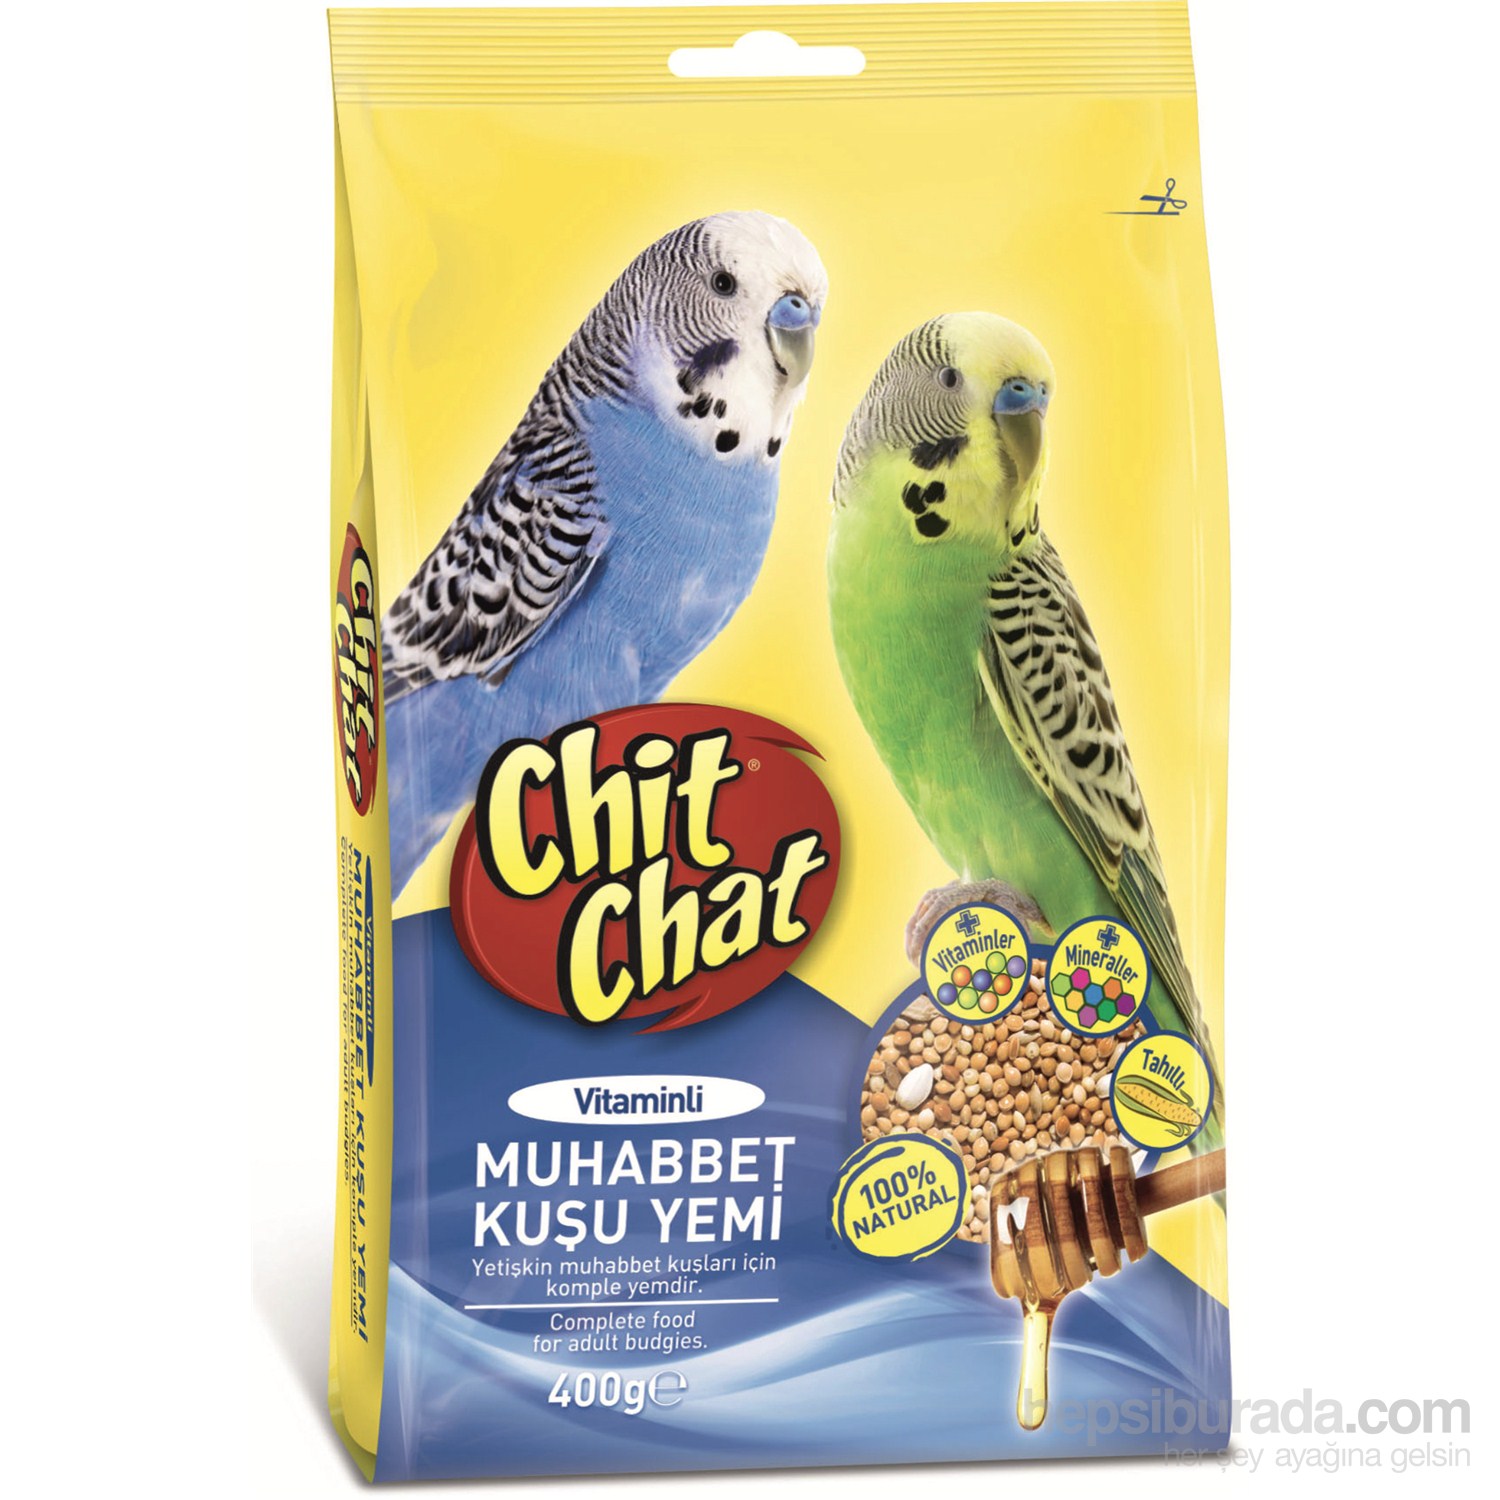 Chit Chat Muhabbet Kuşu Yemi Vitamin 400 Gr